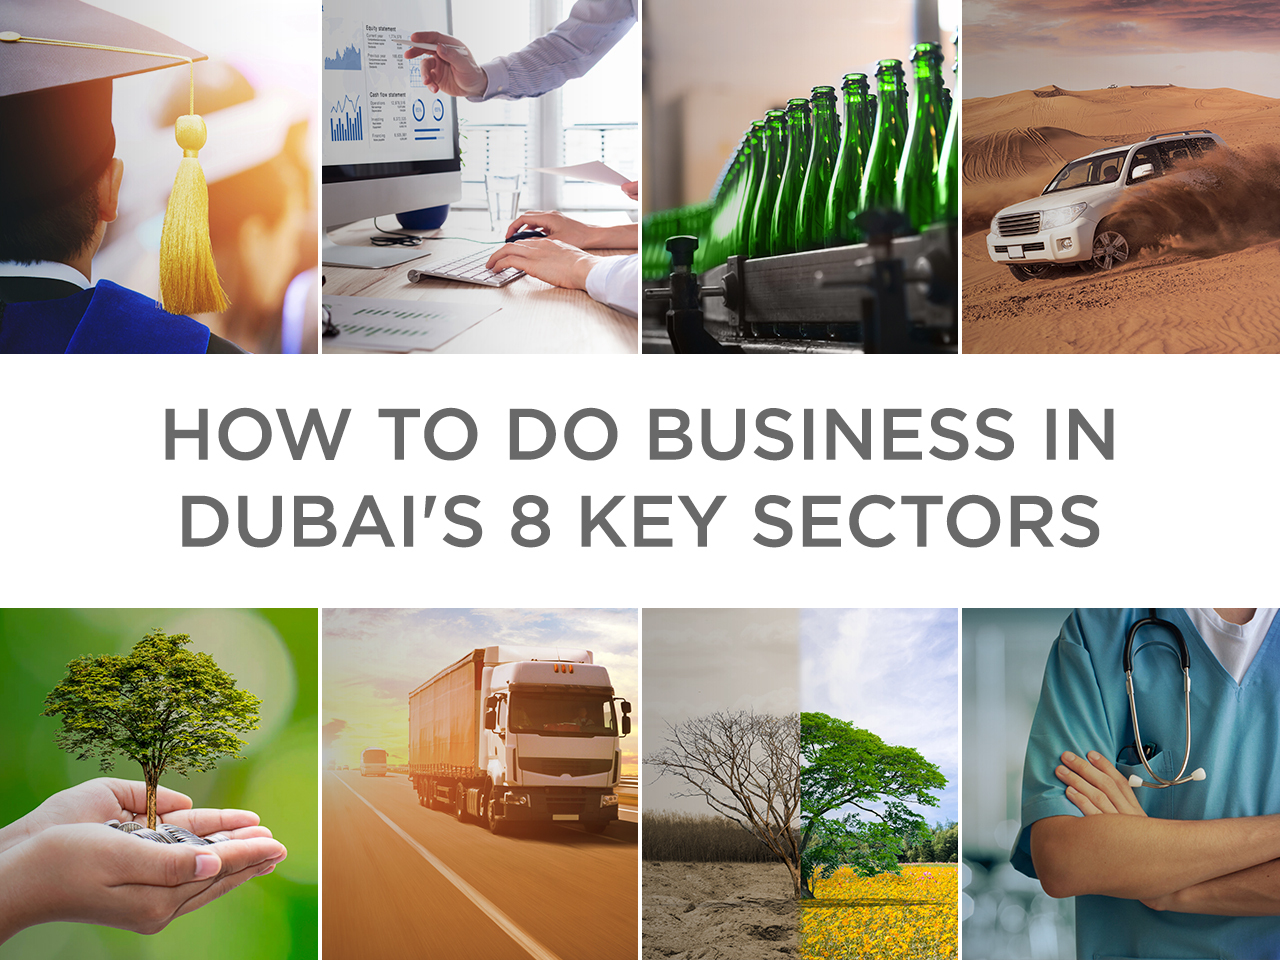 Virtuzone and Dubai Startup Hub launch 8 guides on business setup